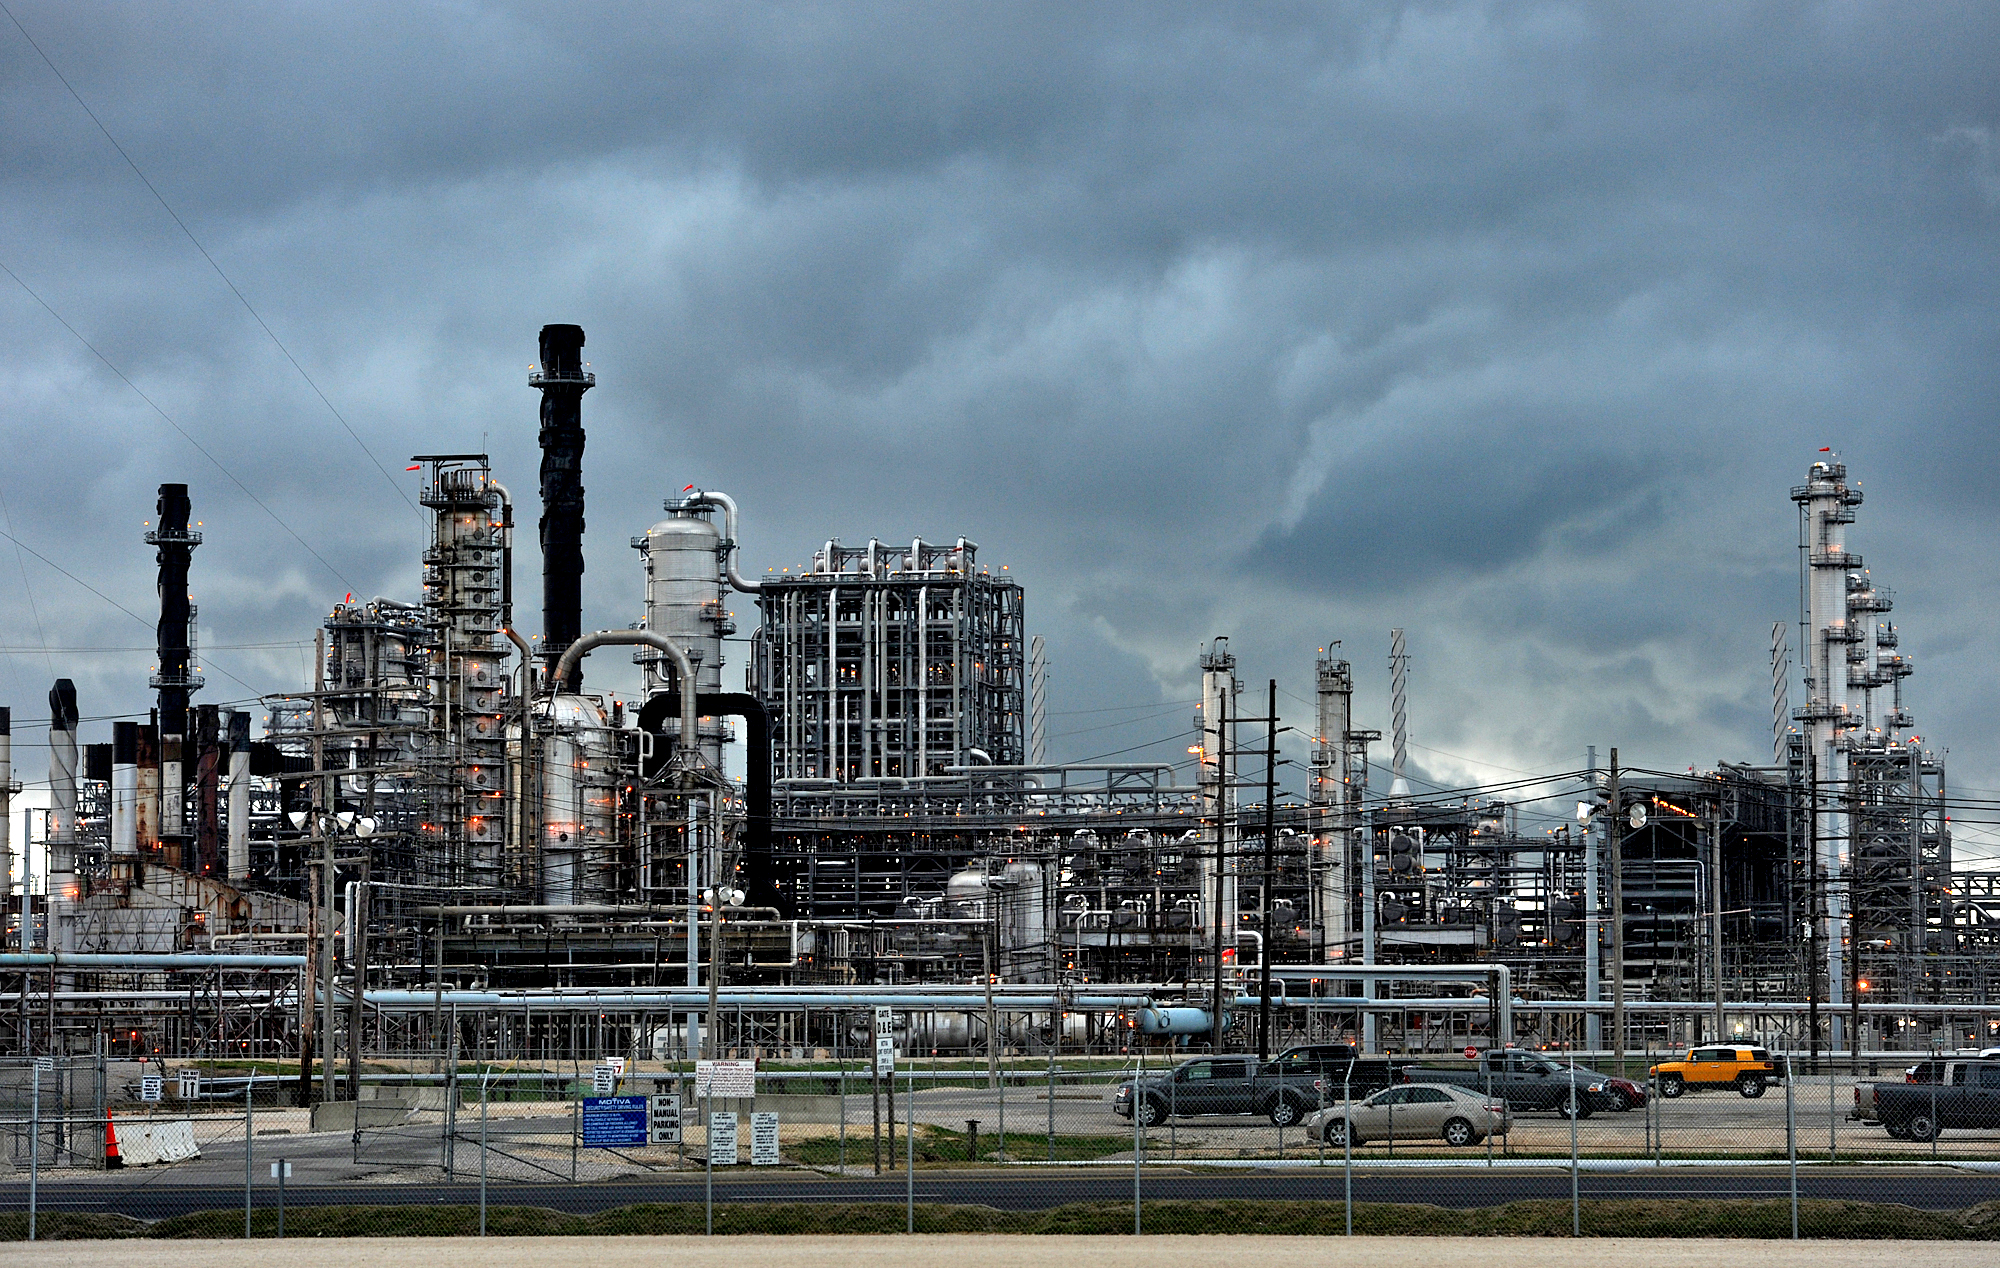 Motiva won't expand oil refining in Port Arthur - Houston Chronicle2000 x 1268